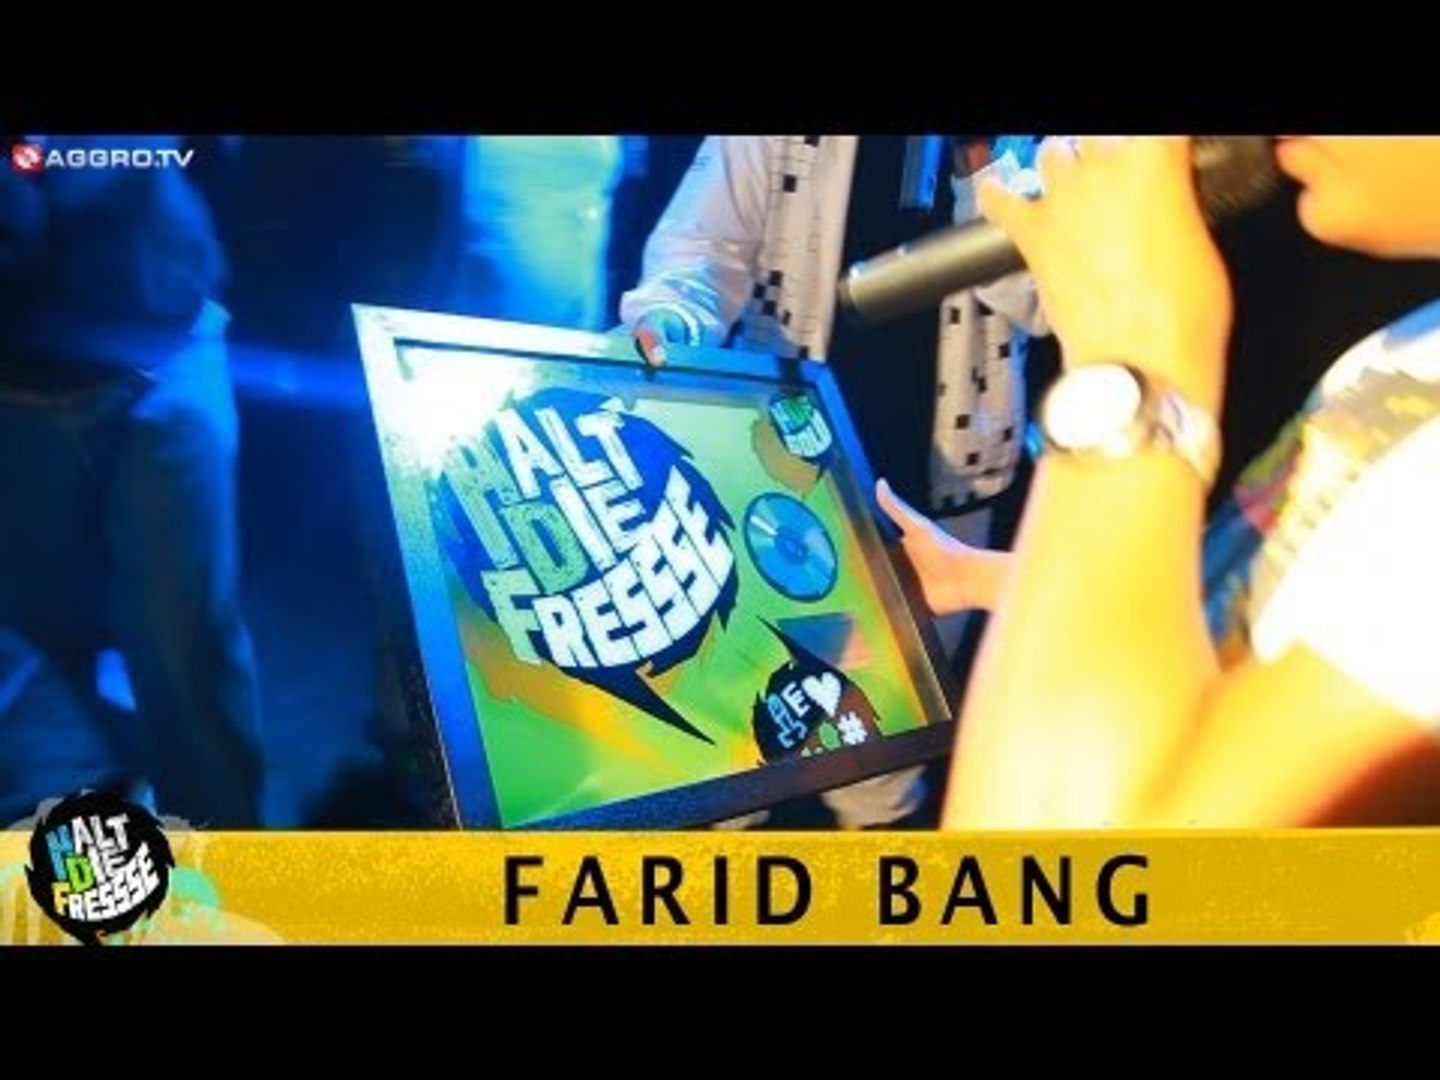 ⁣FARID BANG HALT DIE FRESSE GOLD NR. 04 (OFFICIAL HD VERSION AGGROTV)